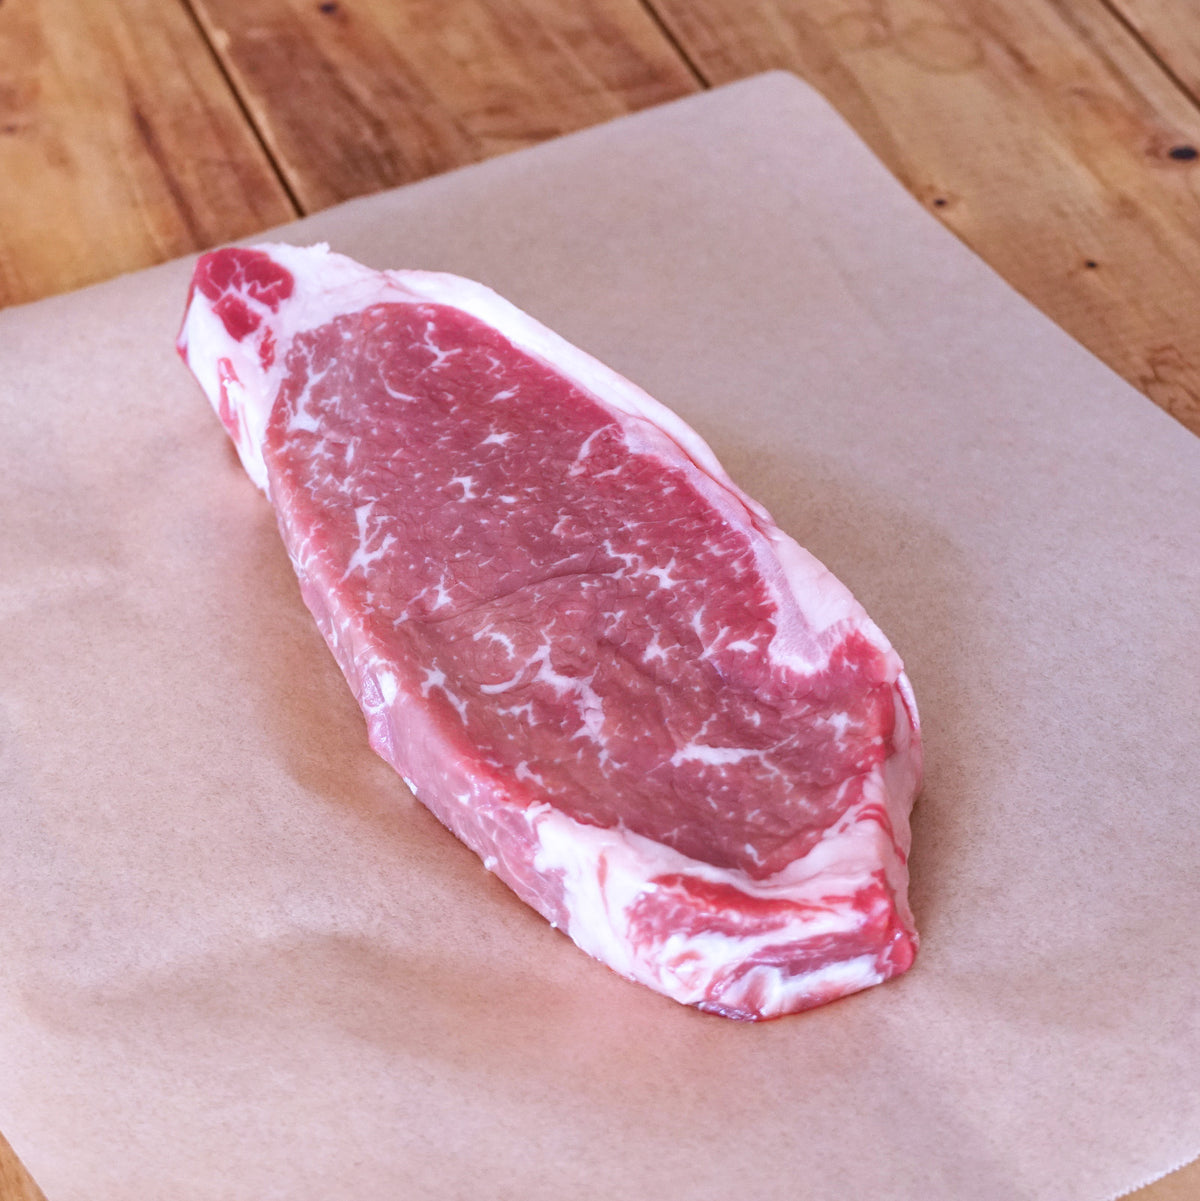 Premium Grain-Fed Beef MB5+ Striploin Steak from Australia (200g) - Horizon Farms